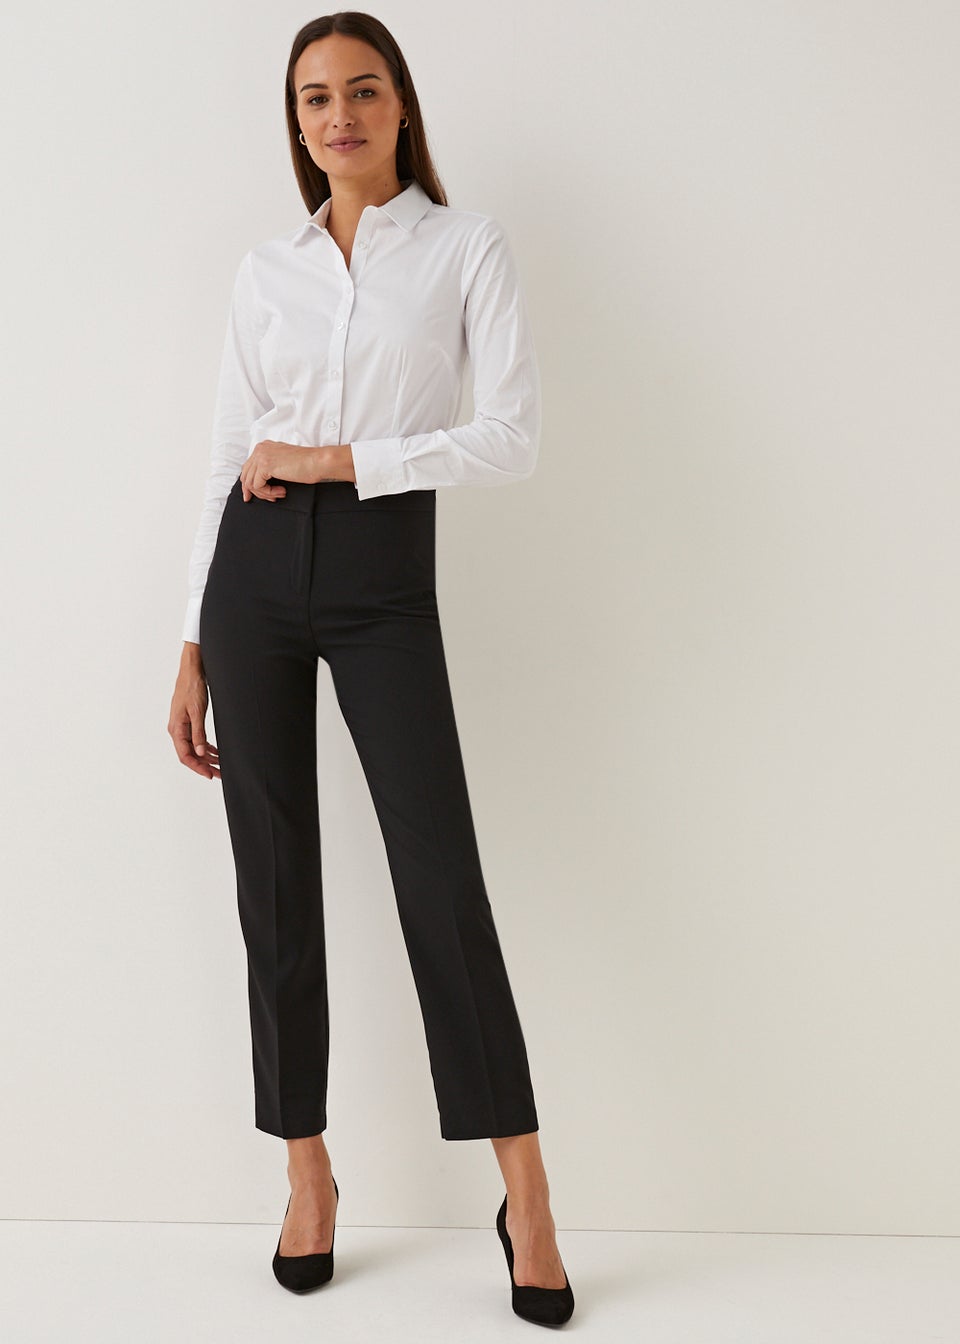 Womens Black Trousers Papaya Size 12 Polyester | eBay-saigonsouth.com.vn